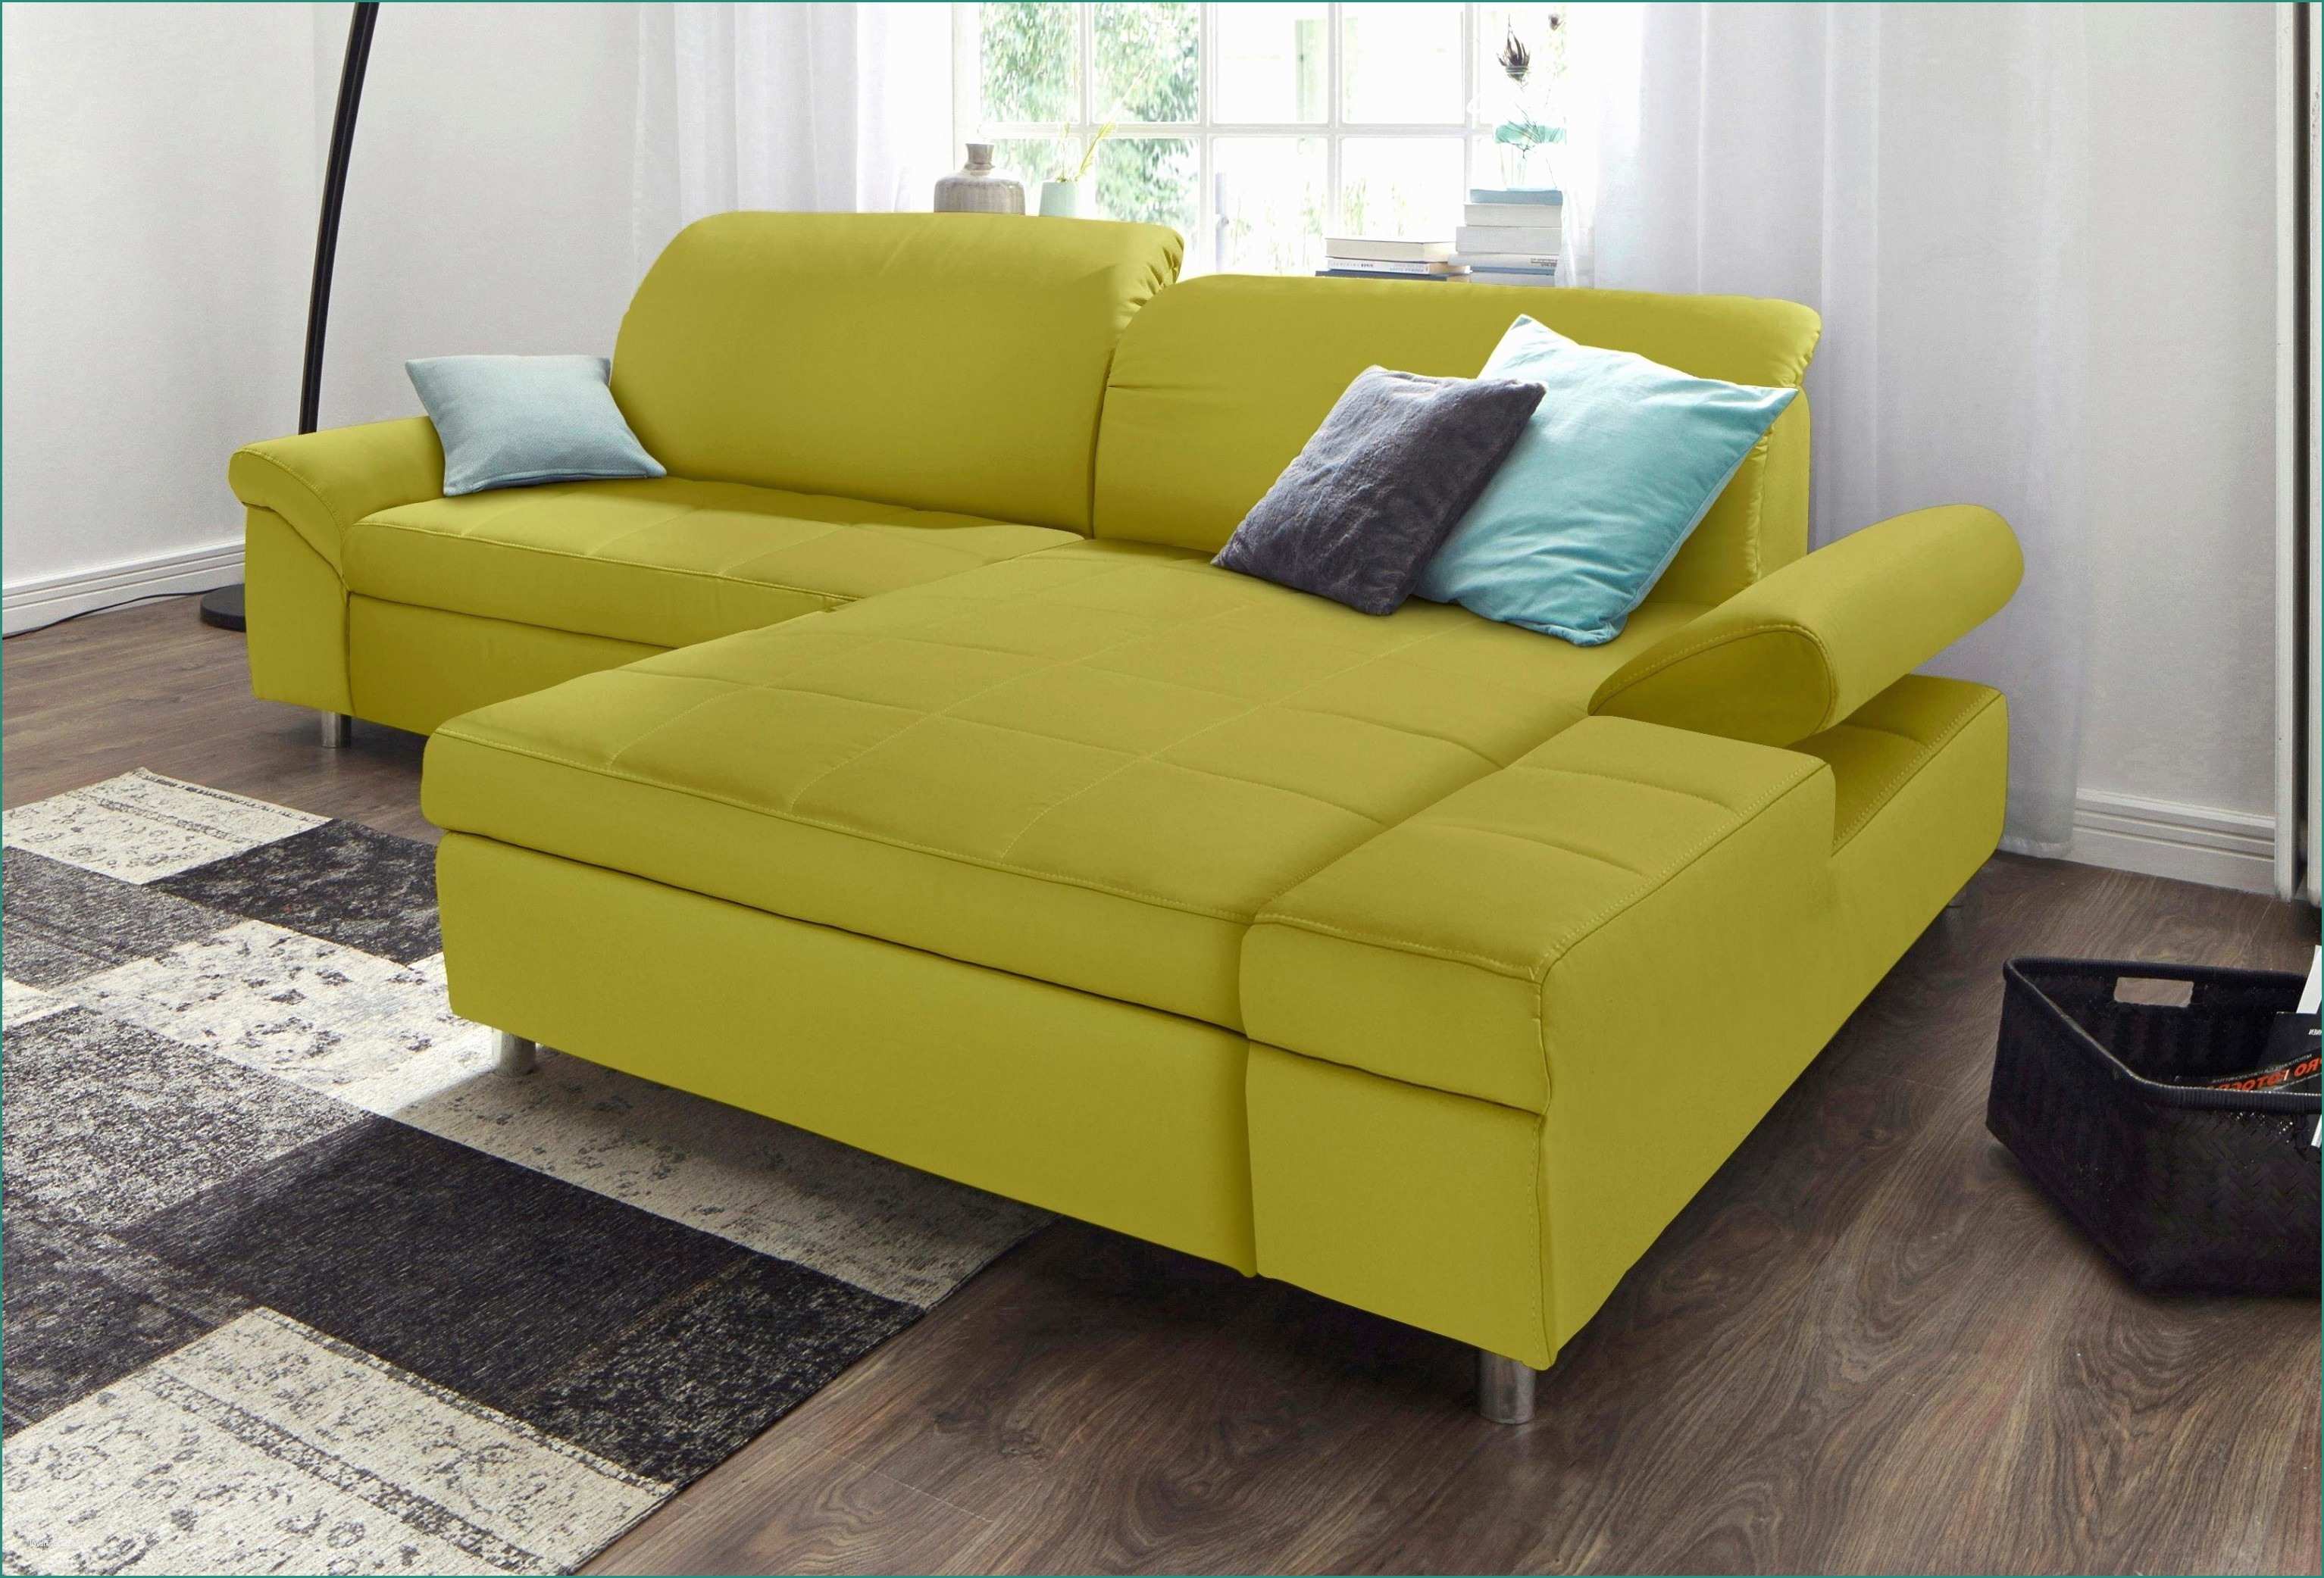 Verner Panton Chair E Panton Chair orange Innerhalb Mobel Yellow Living Room Lounge Chair